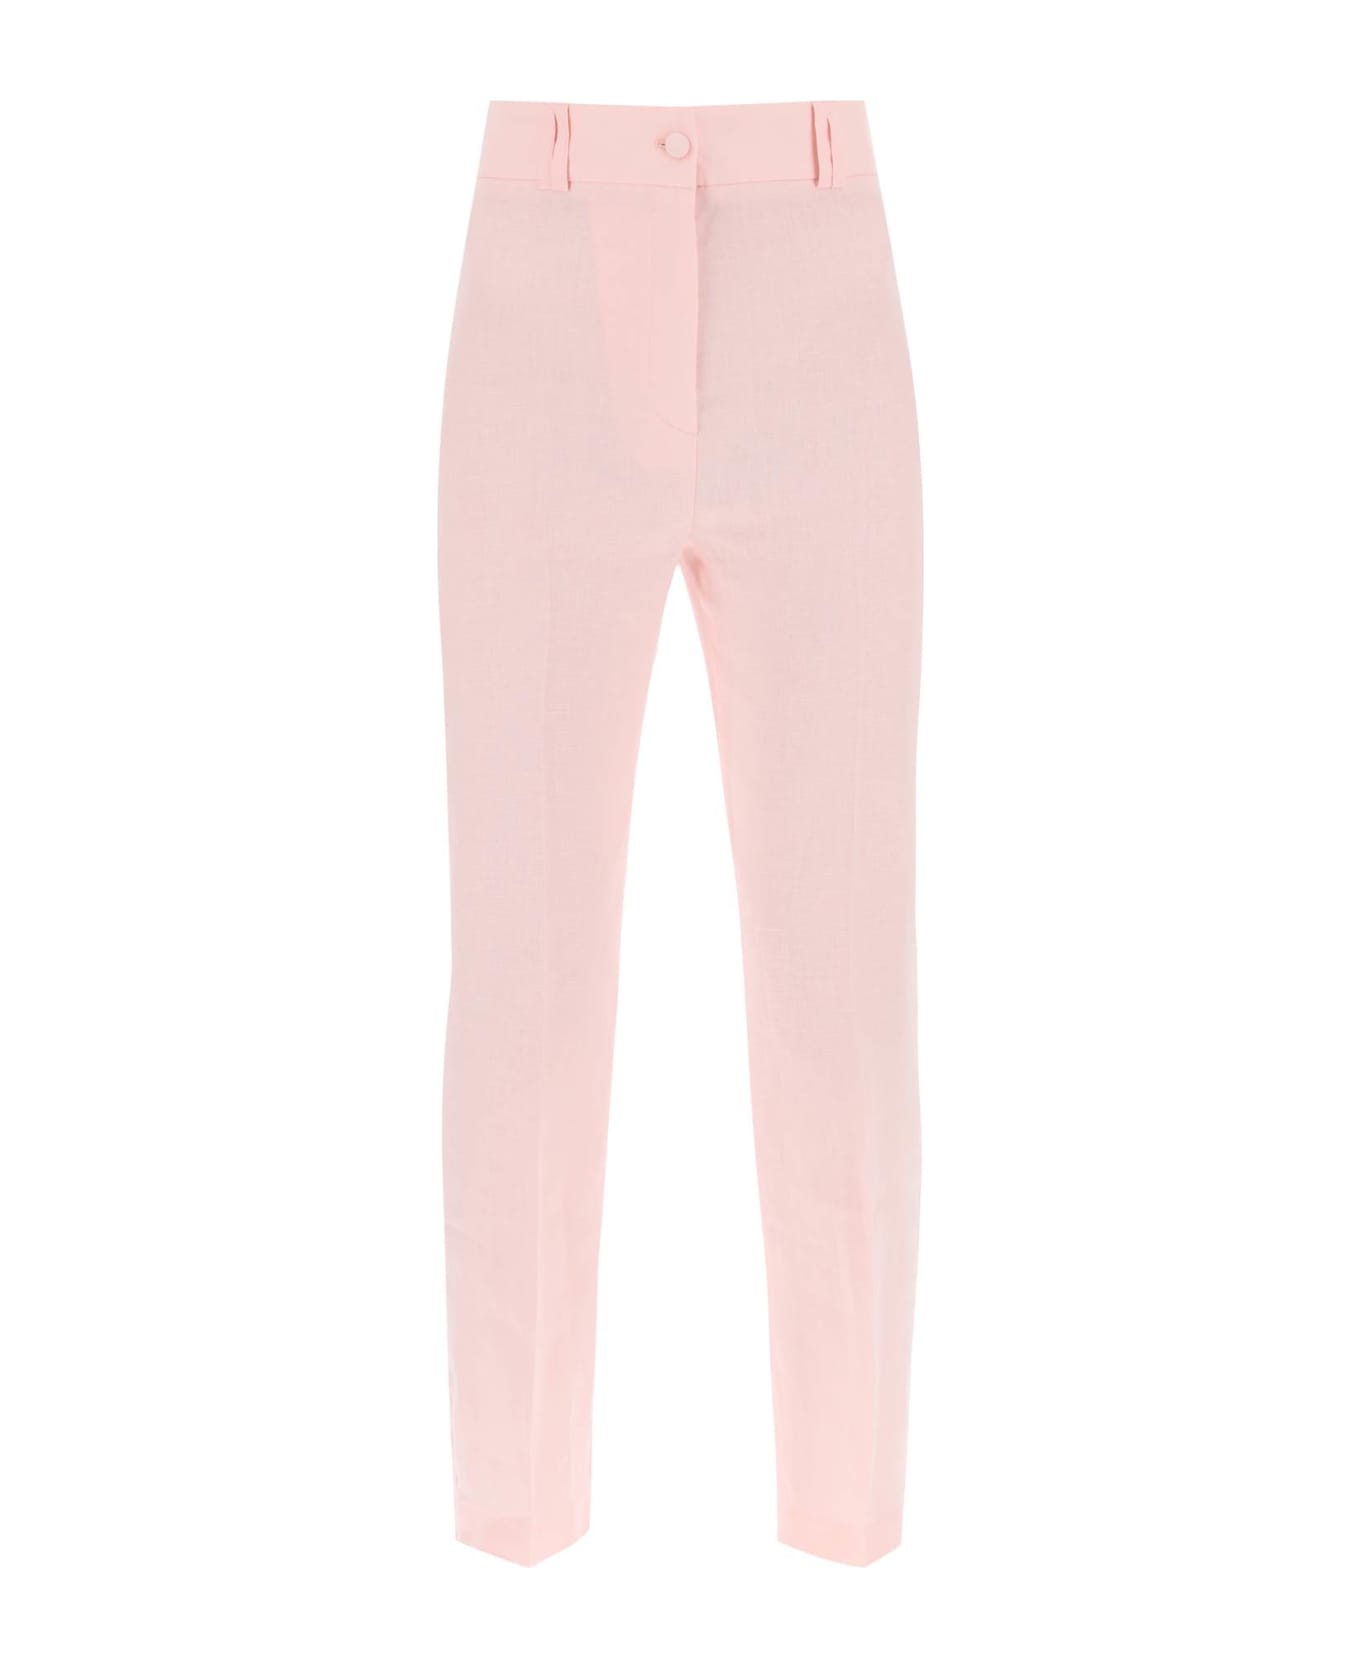 Hebe Studio 'loulou' Linen Trousers - PINK CALYPSO (Pink)